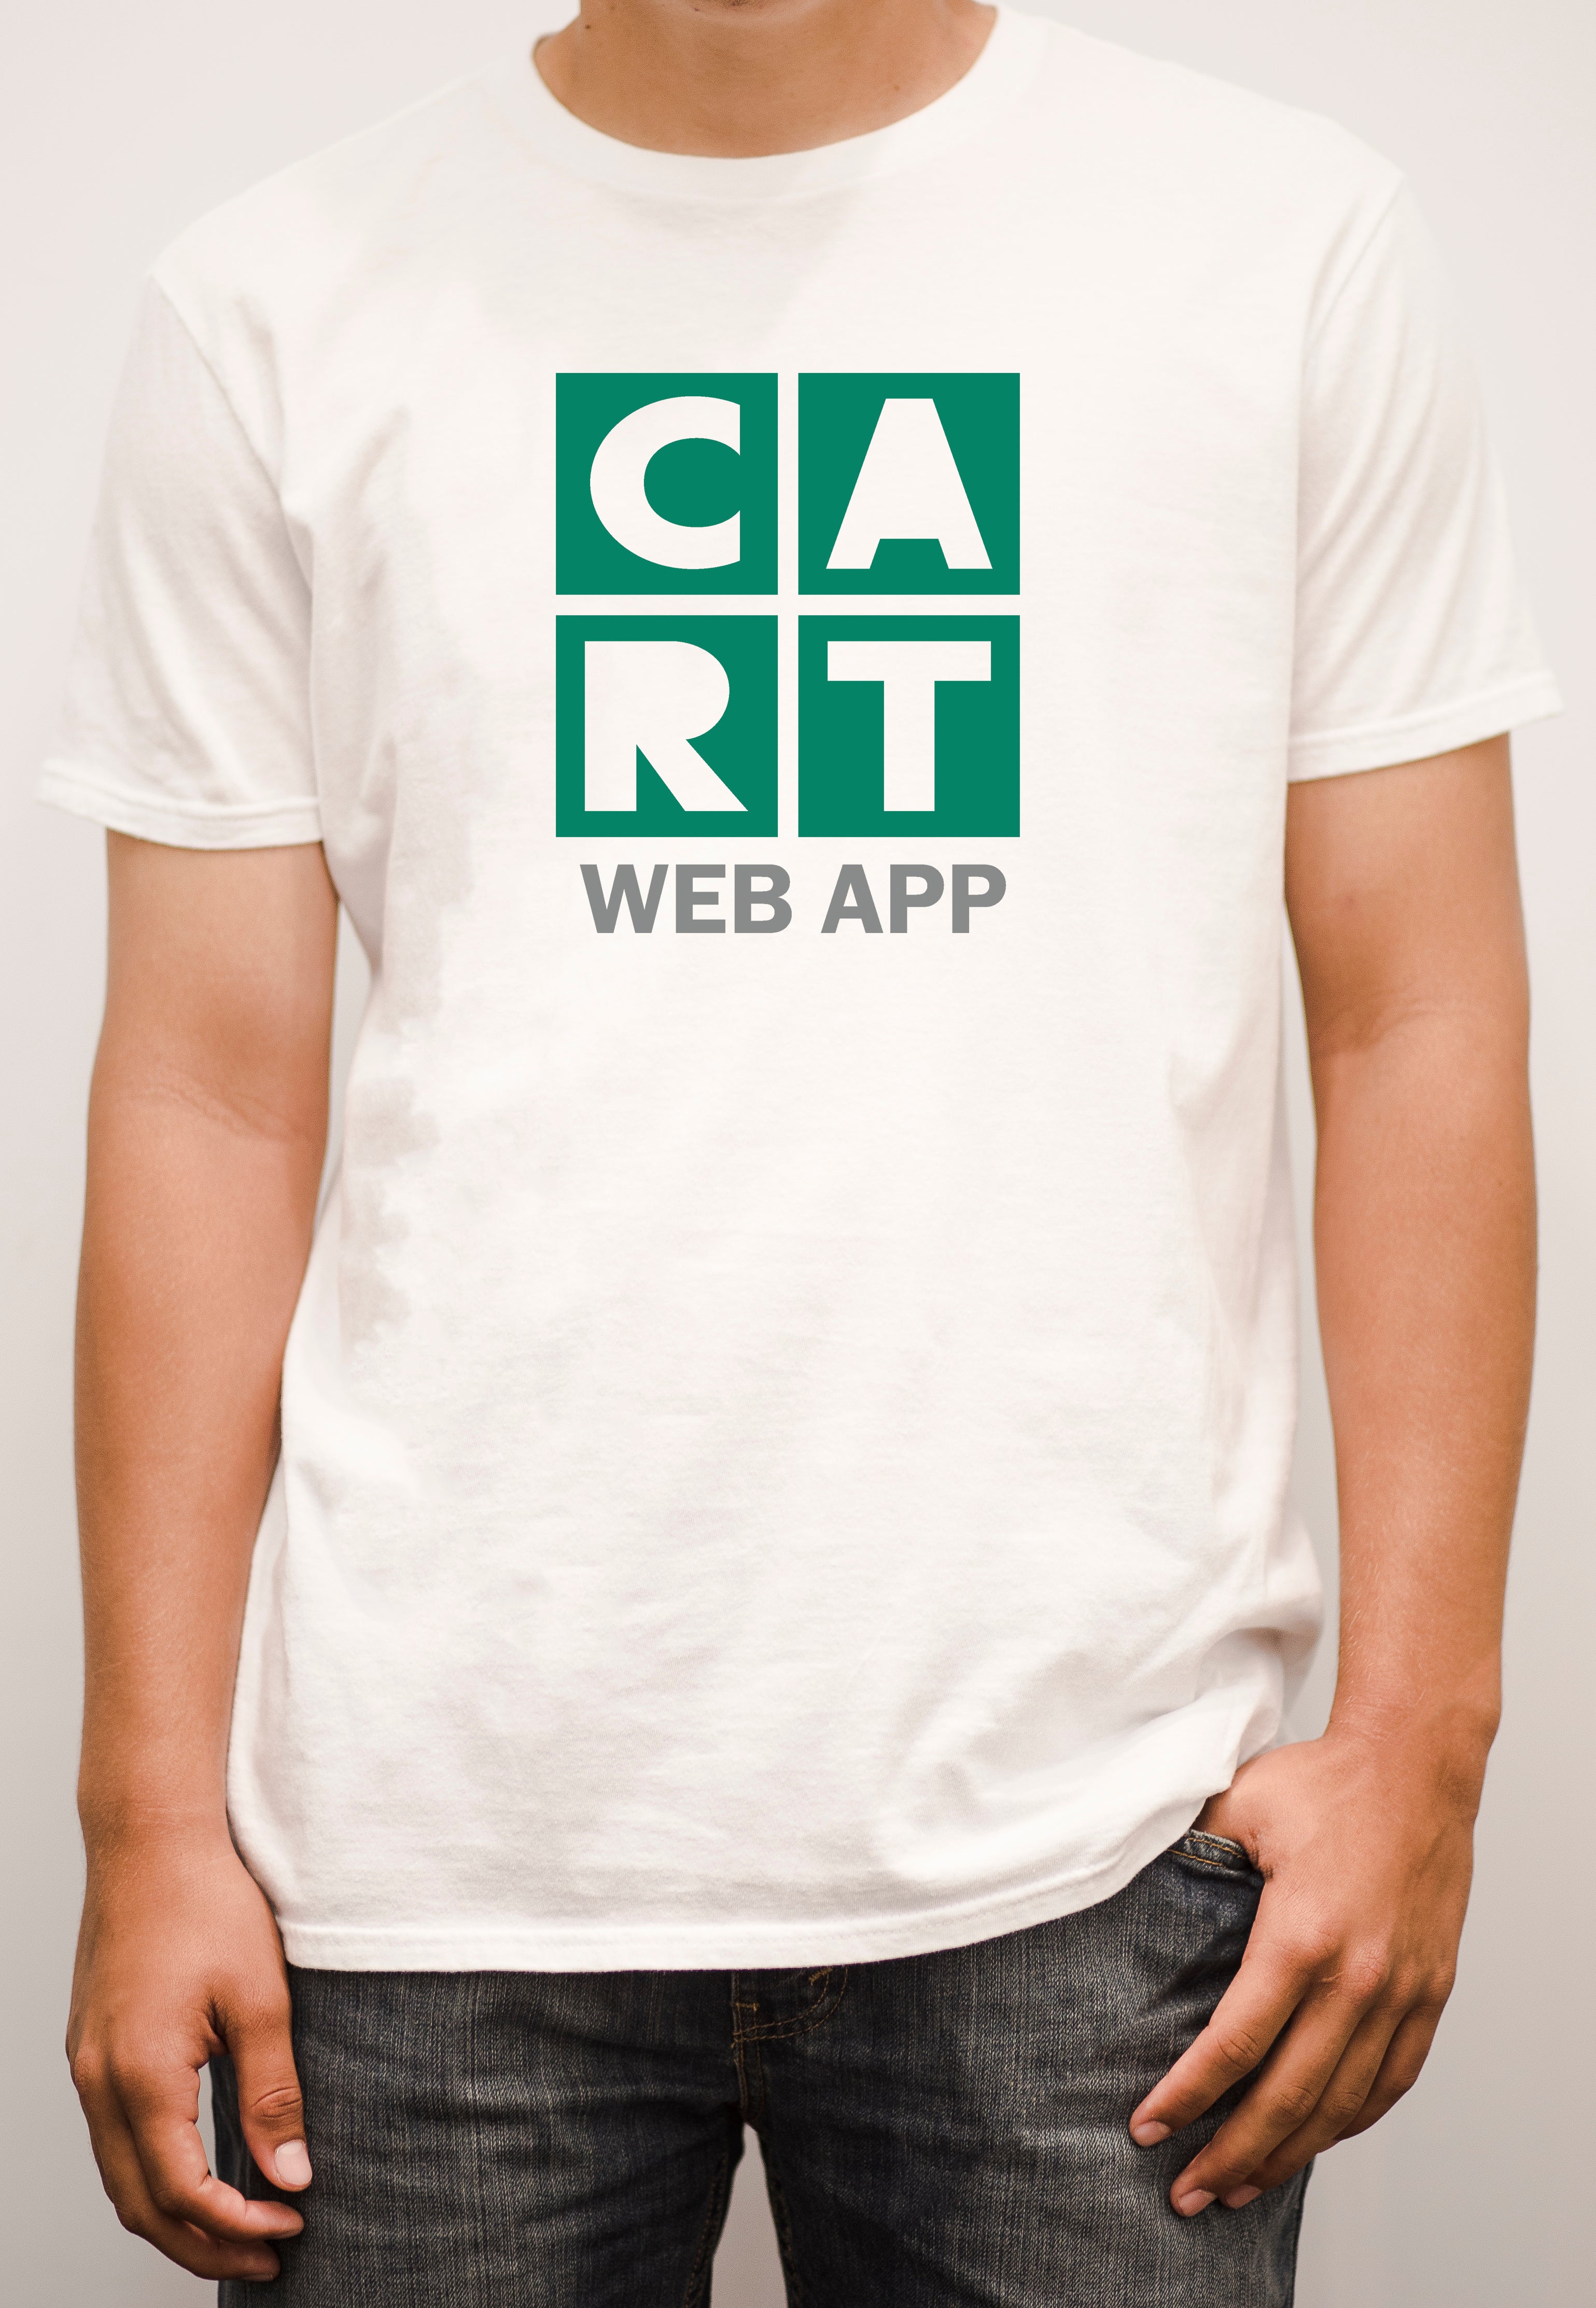 Short sleeve t-shirt - web application grey/green